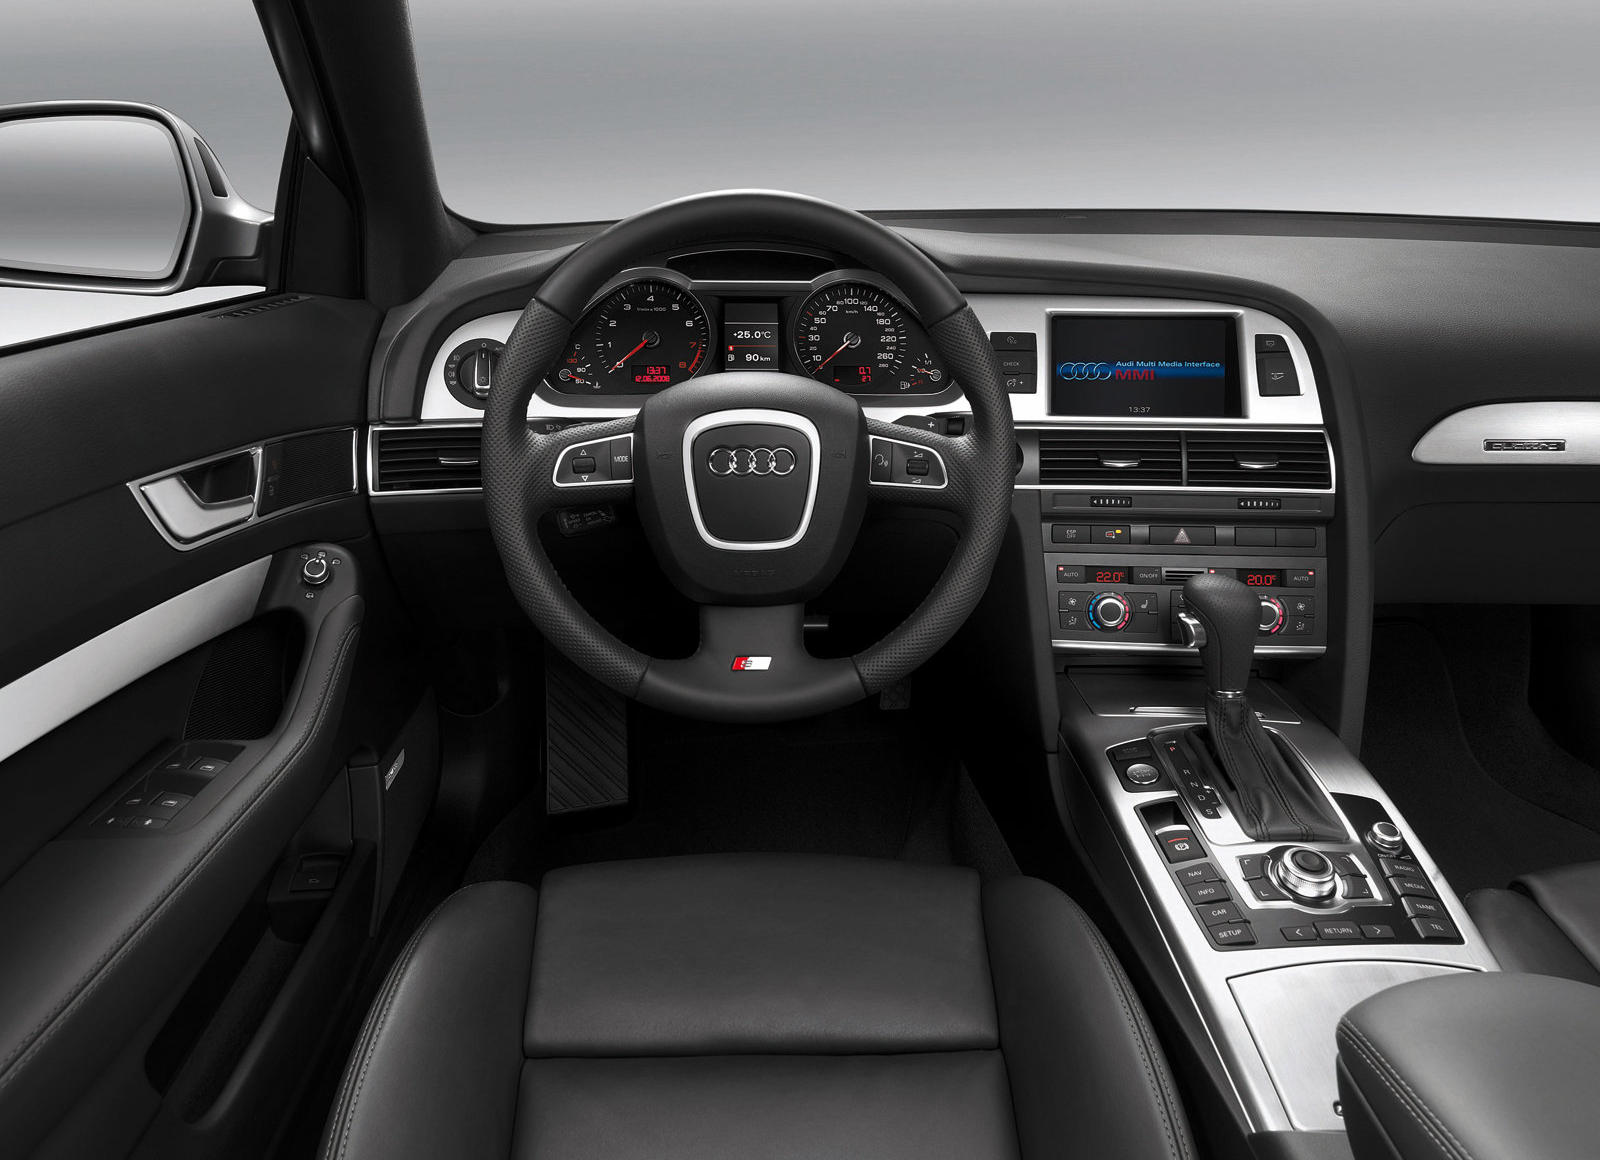 2011 Audi A6 Avant 4G C7 30 TFSI 310 Hp quattro S tronic  Technical  specs data fuel consumption Dimensions